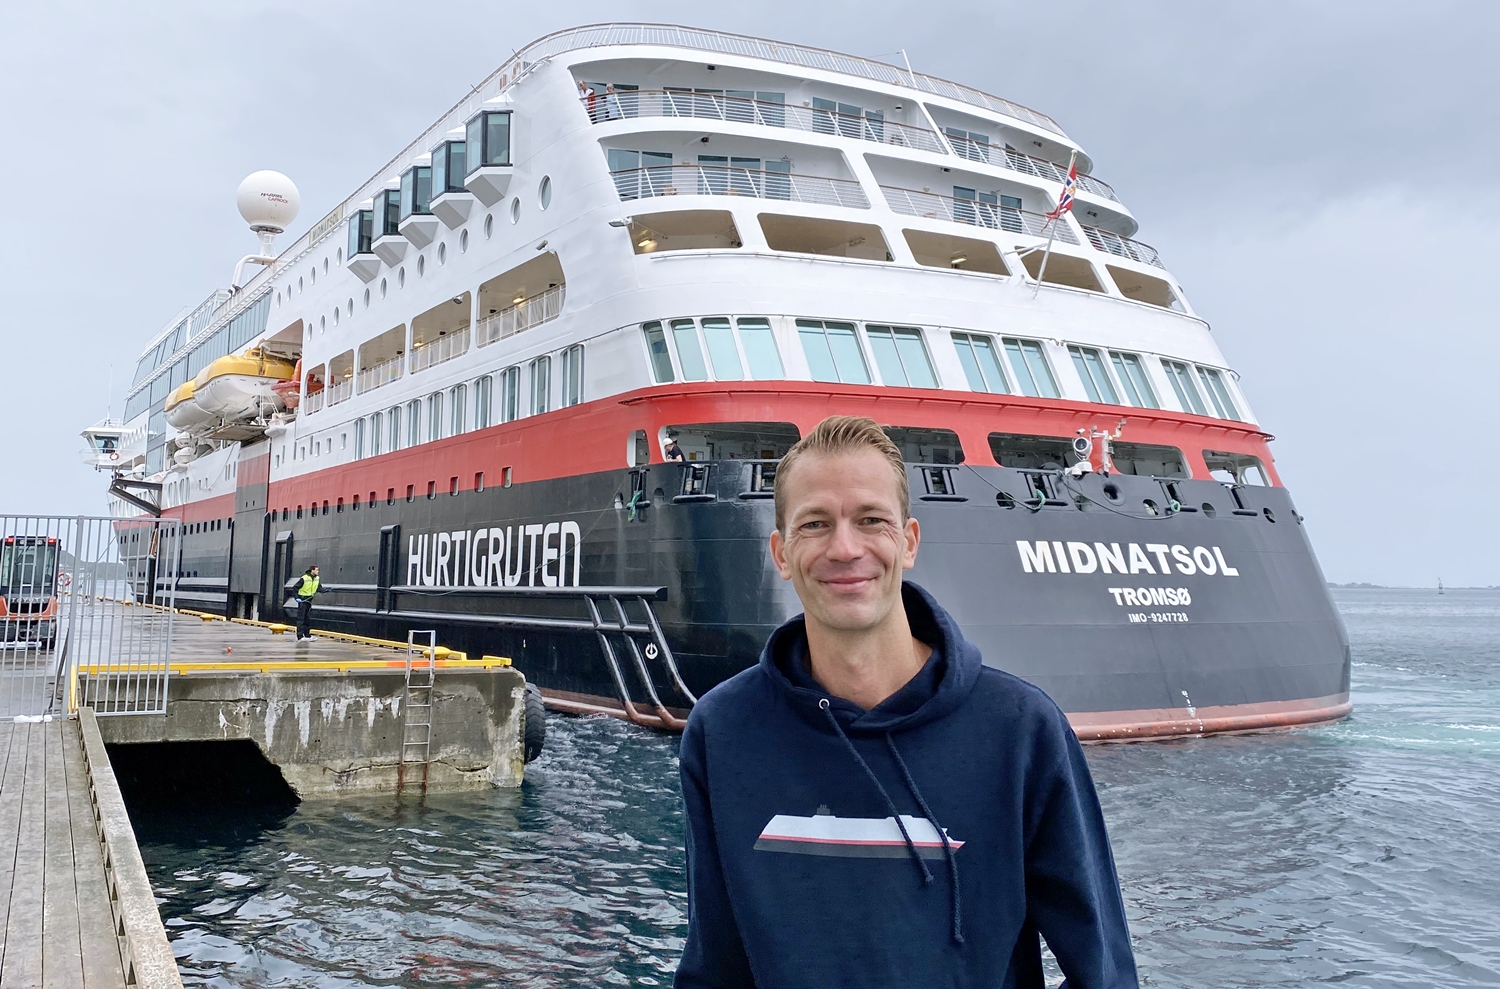 MS midnatsol am Hurtigruten Anleger in Alesund